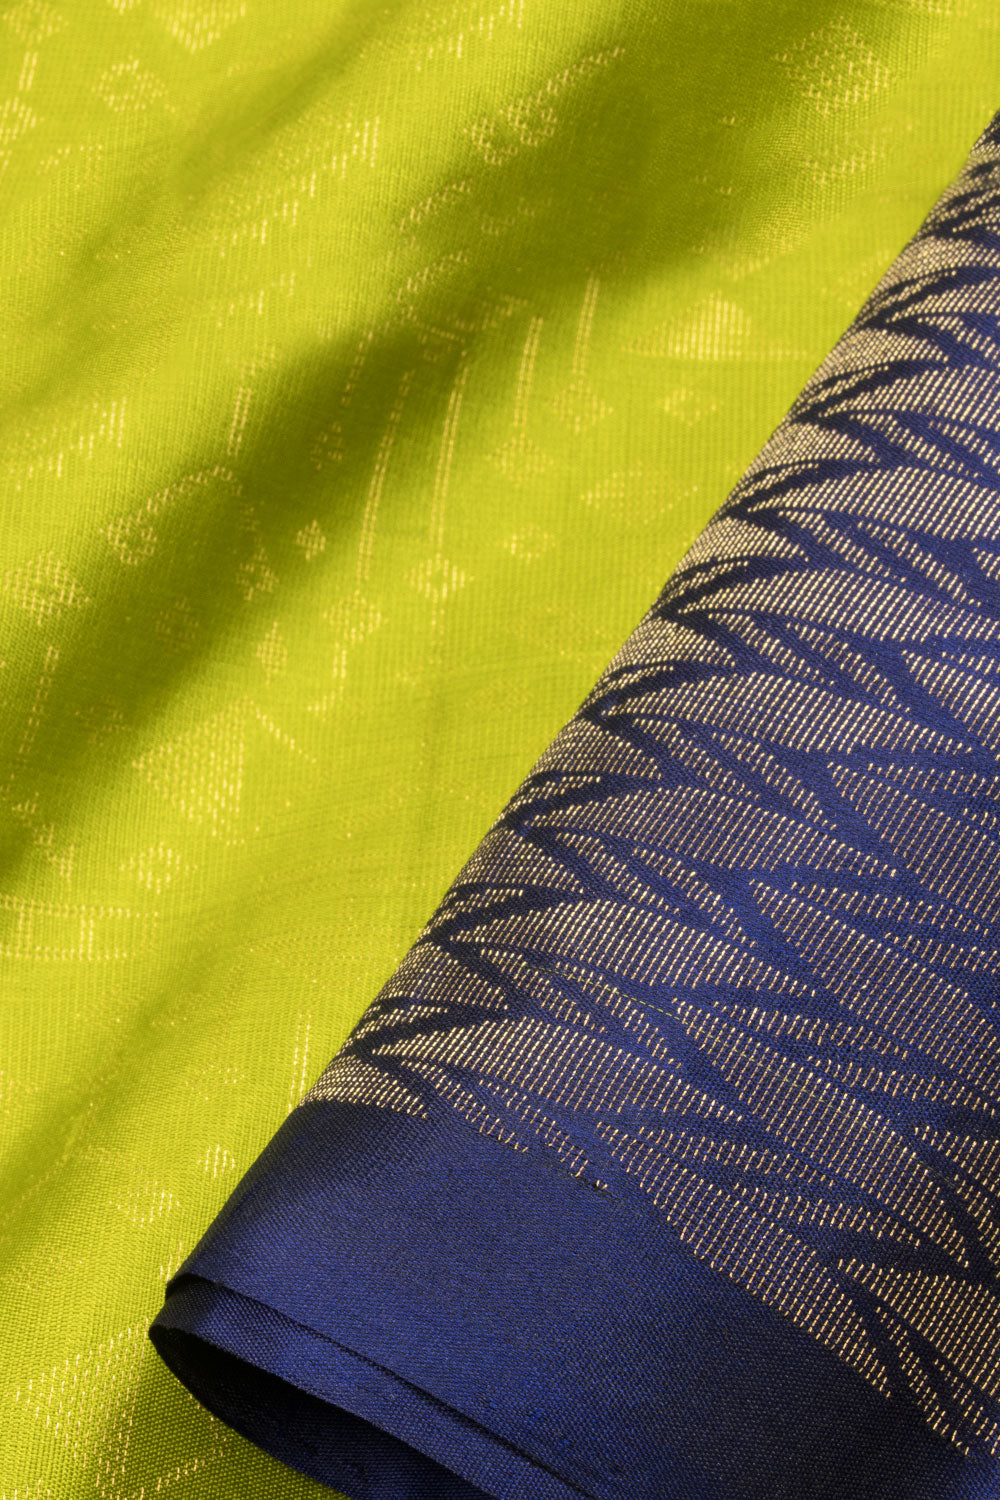 Chartreuse Yellow Kanjivaram Soft Silk Saree 10067960